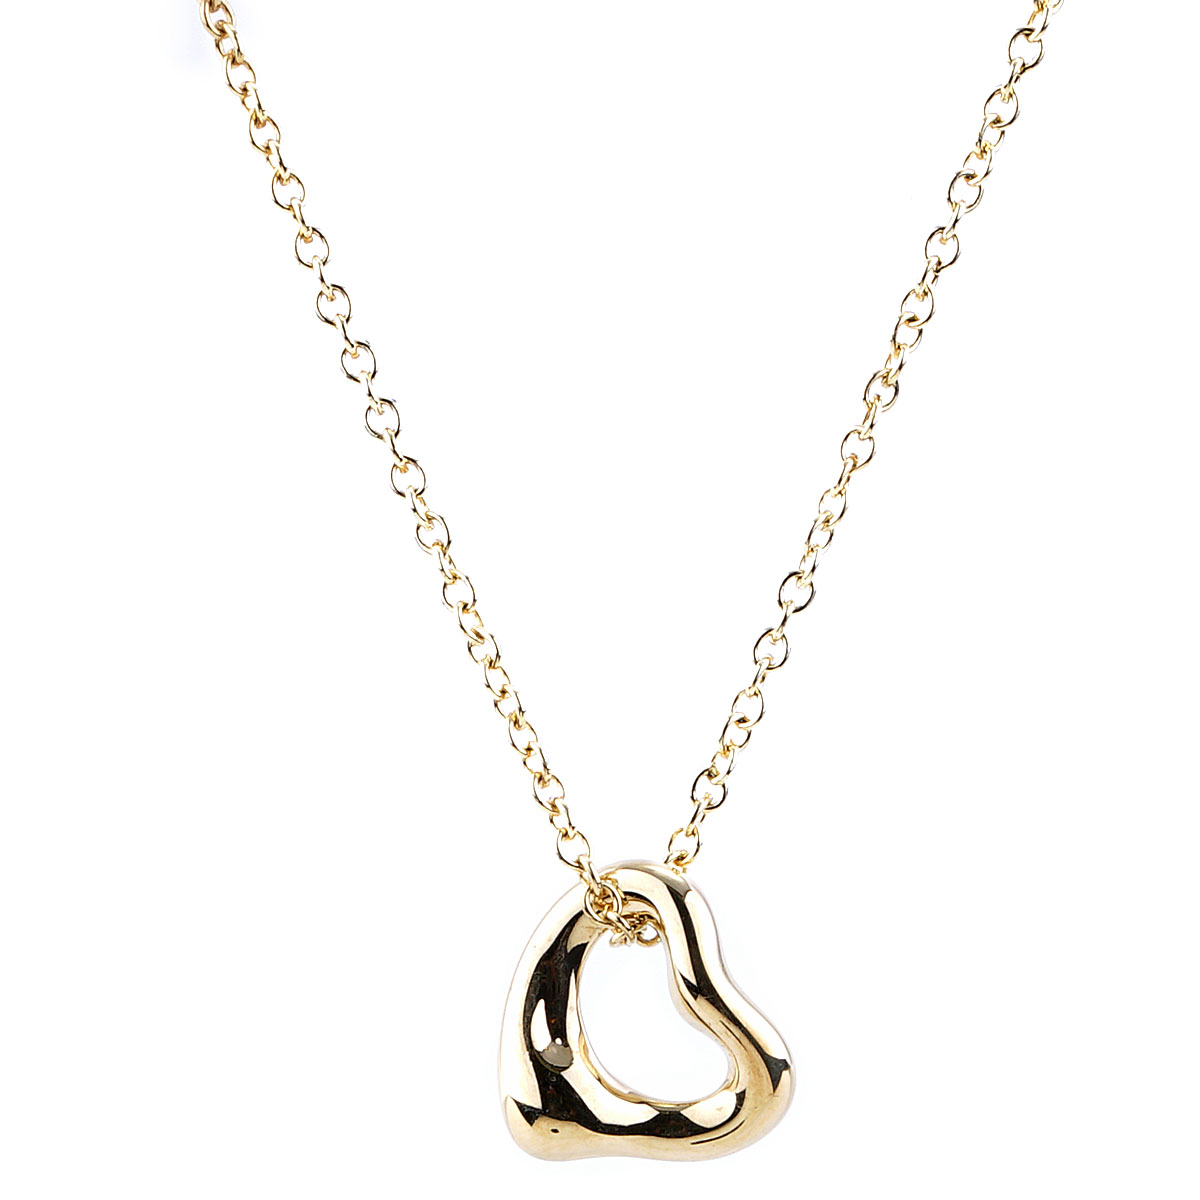 Vintage Tiffany & Co Elsa Peretti Open Heart Necklace 18k Yellow Gold 27mm  18